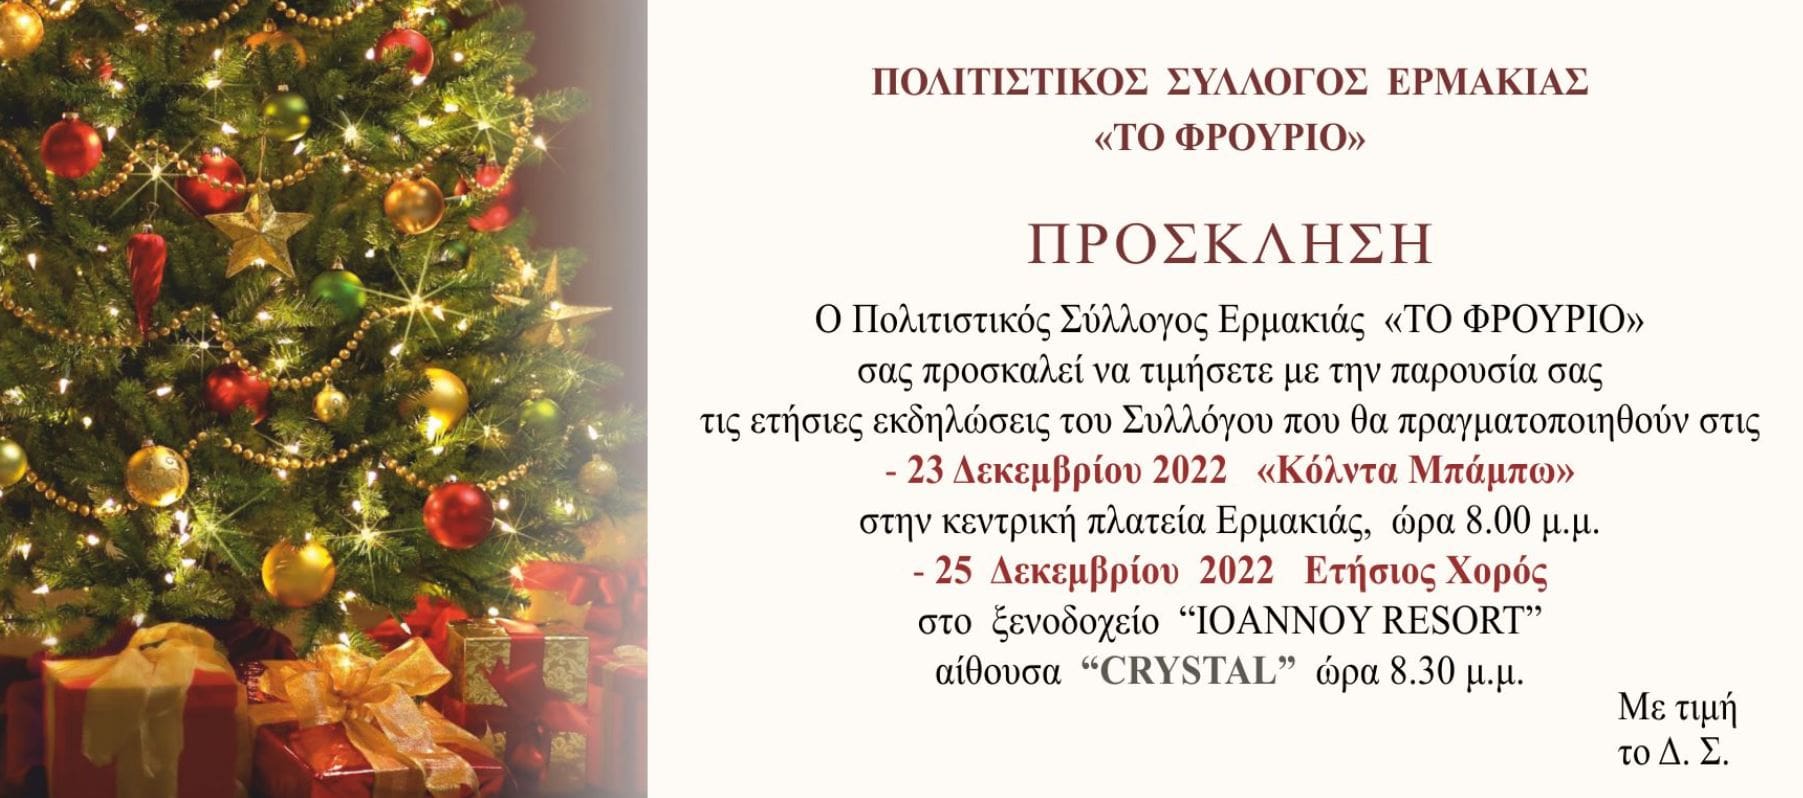 Eordaialive.com - Τα Νέα της Πτολεμαΐδας, Εορδαίας, Κοζάνης Χριστουγεννιάτικες εκδηλώσεις του πολιτιστικού συλλόγου Ερμακιάς ΤΟ ΦΡΟΥΡΙΟ